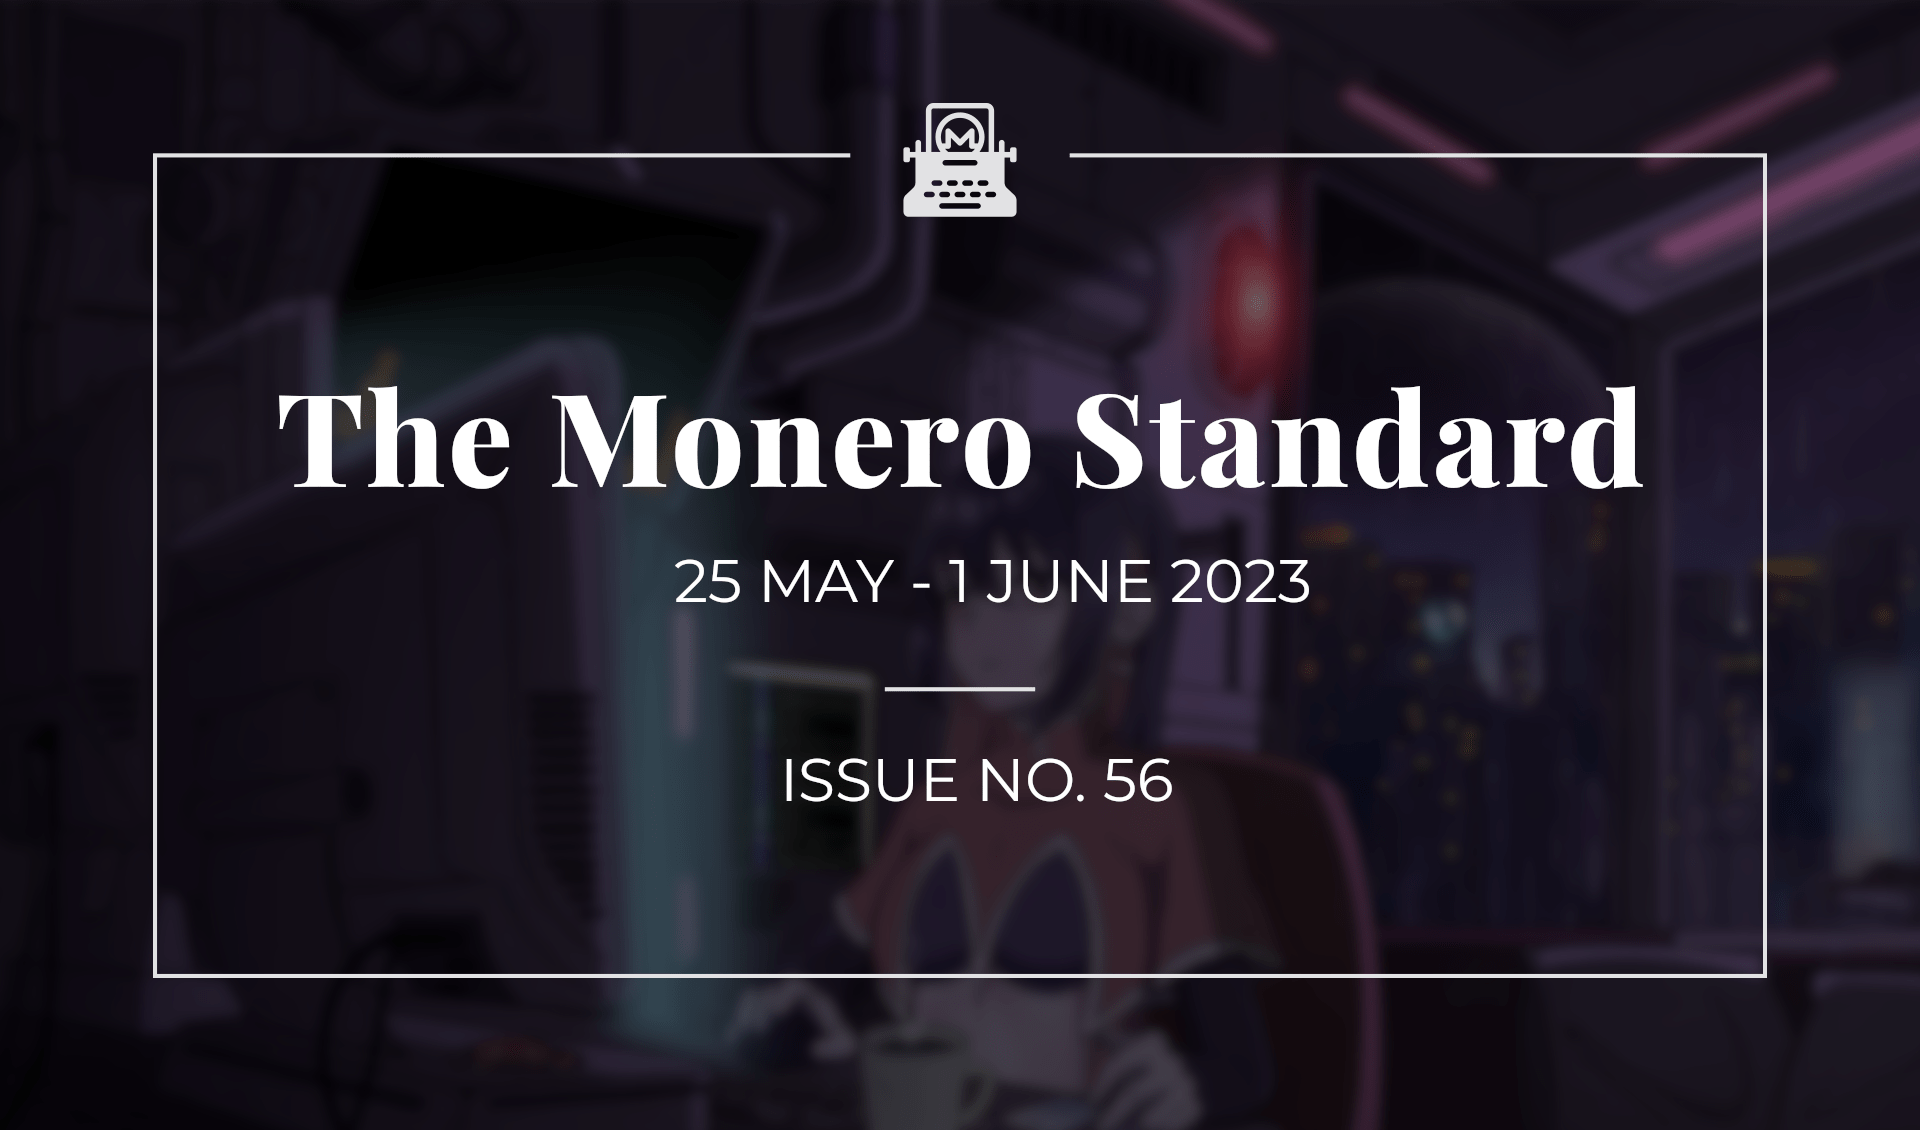 The Monero Standard #56: 25 May 2023 - 1 June 2023